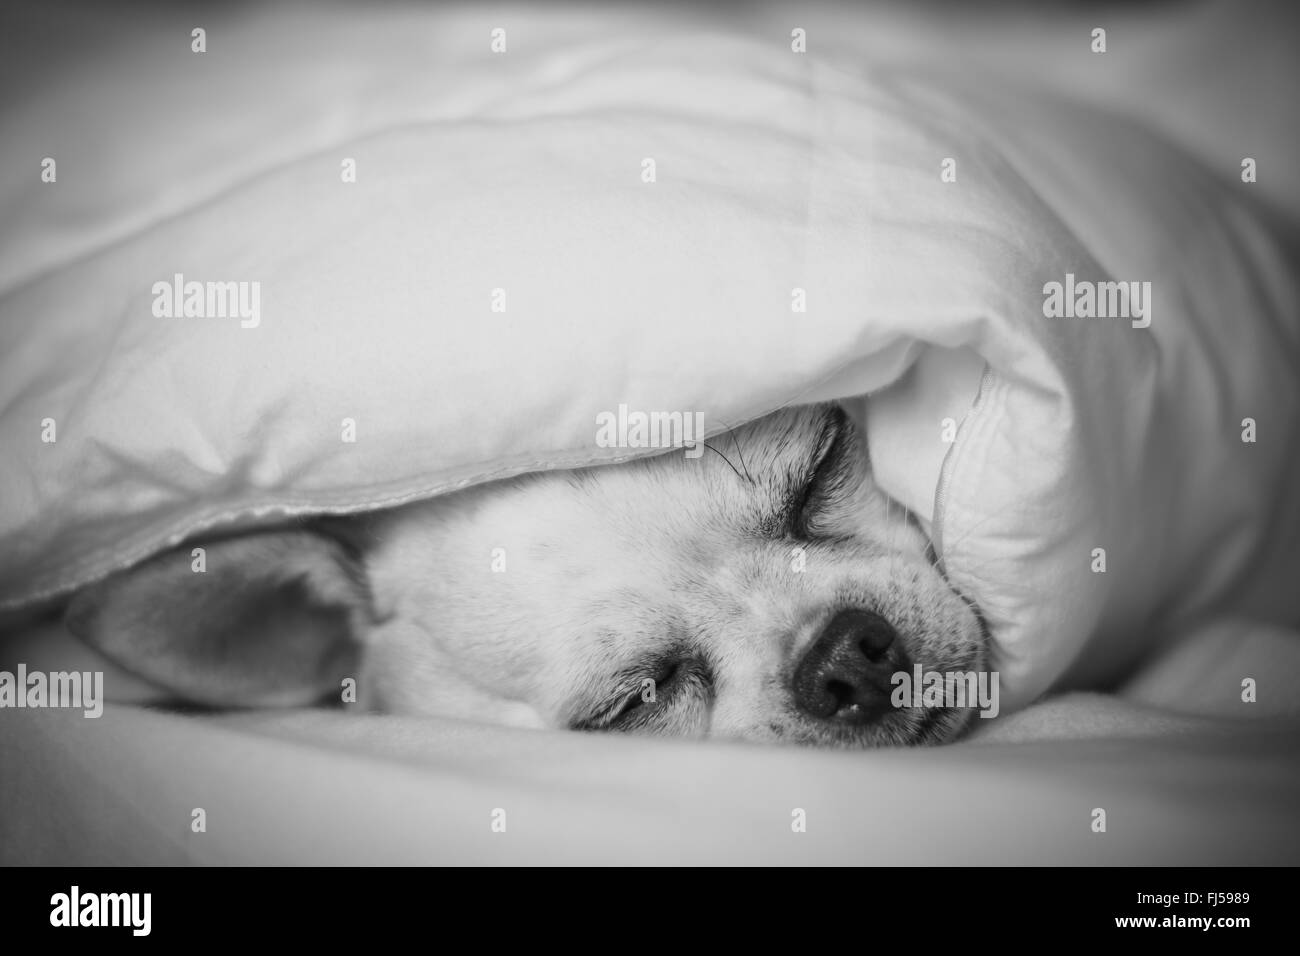 Dog sleeping under blanket Stock Photo